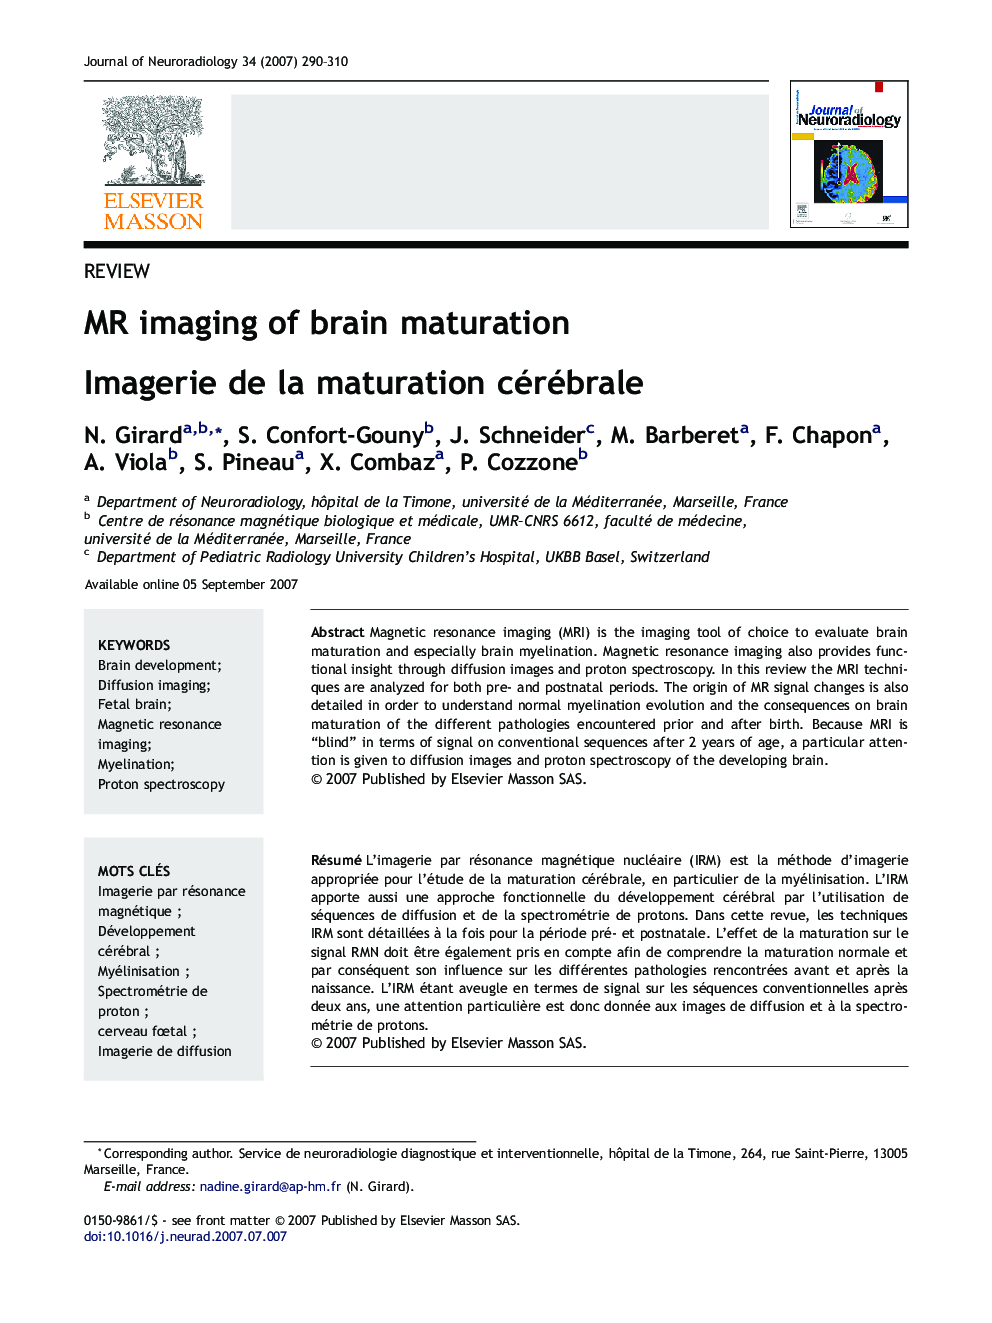 MR imaging of brain maturation